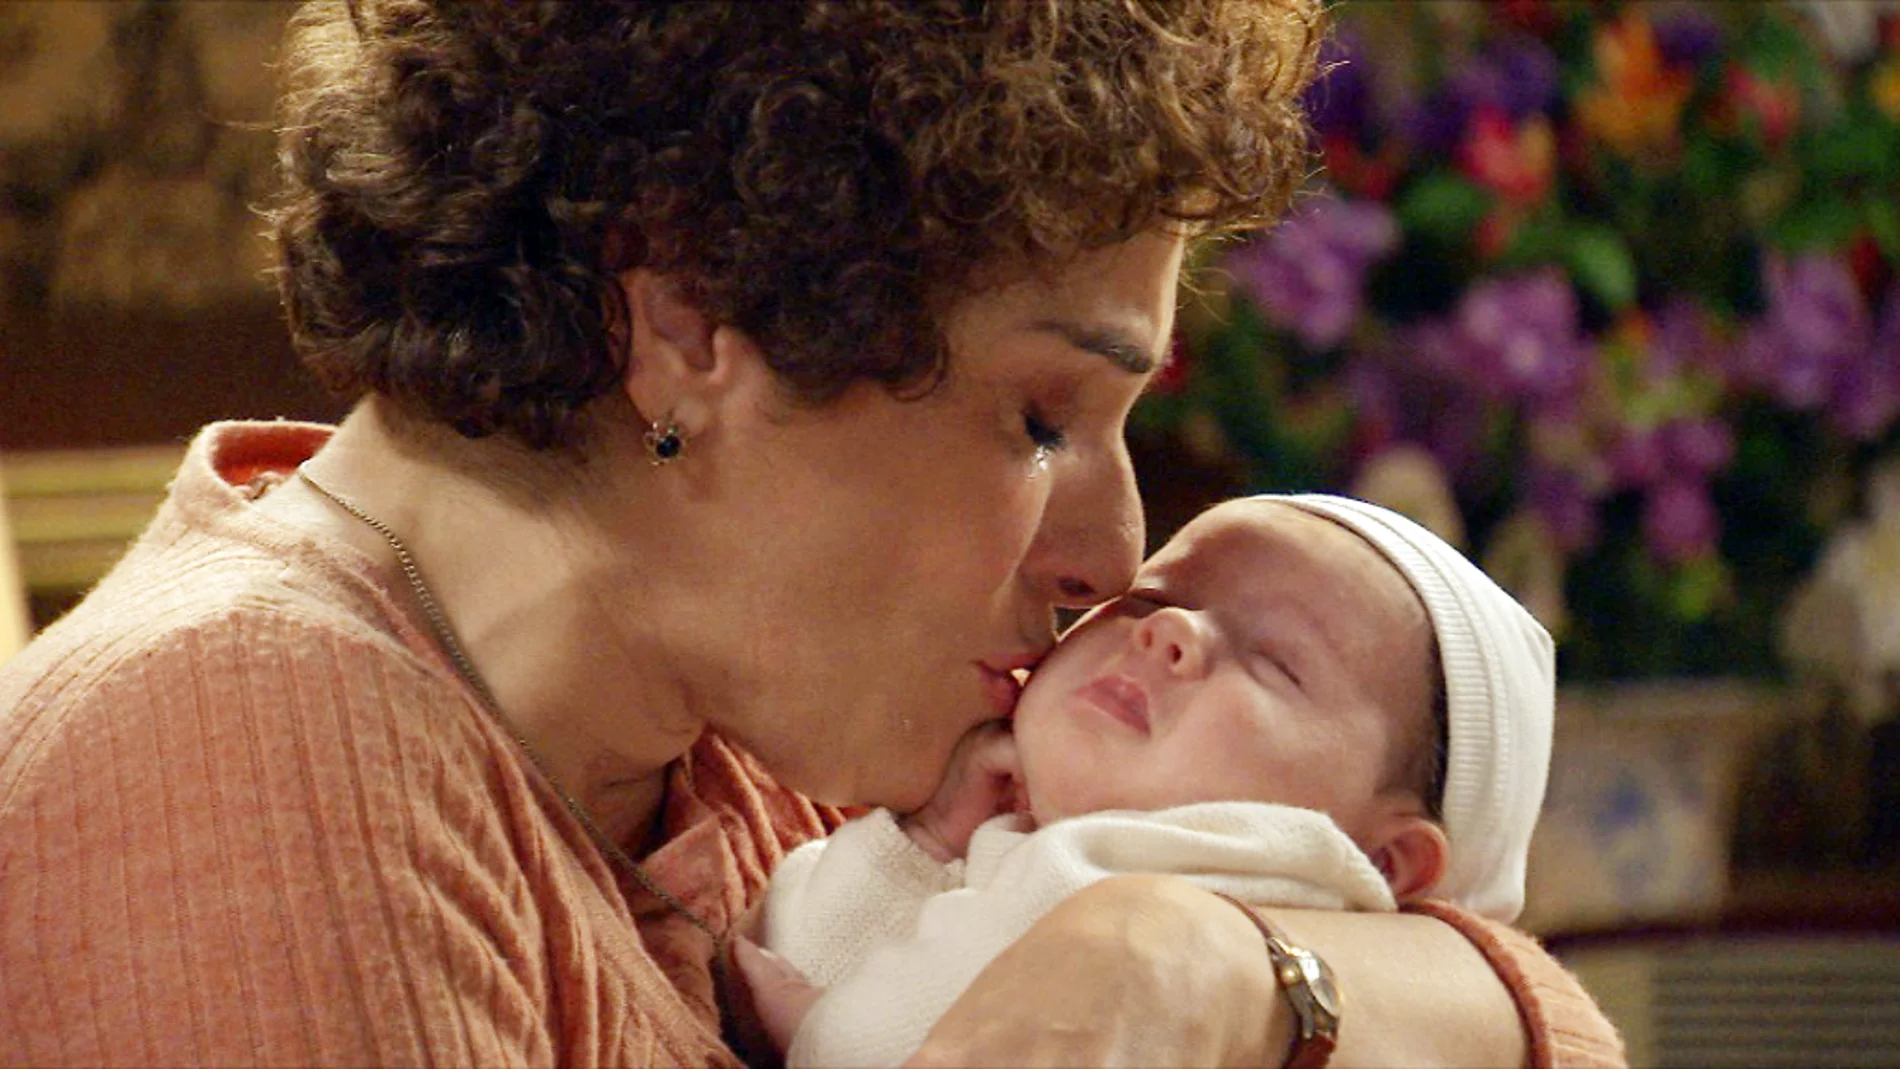 Benigna entrega al bebe moisés 